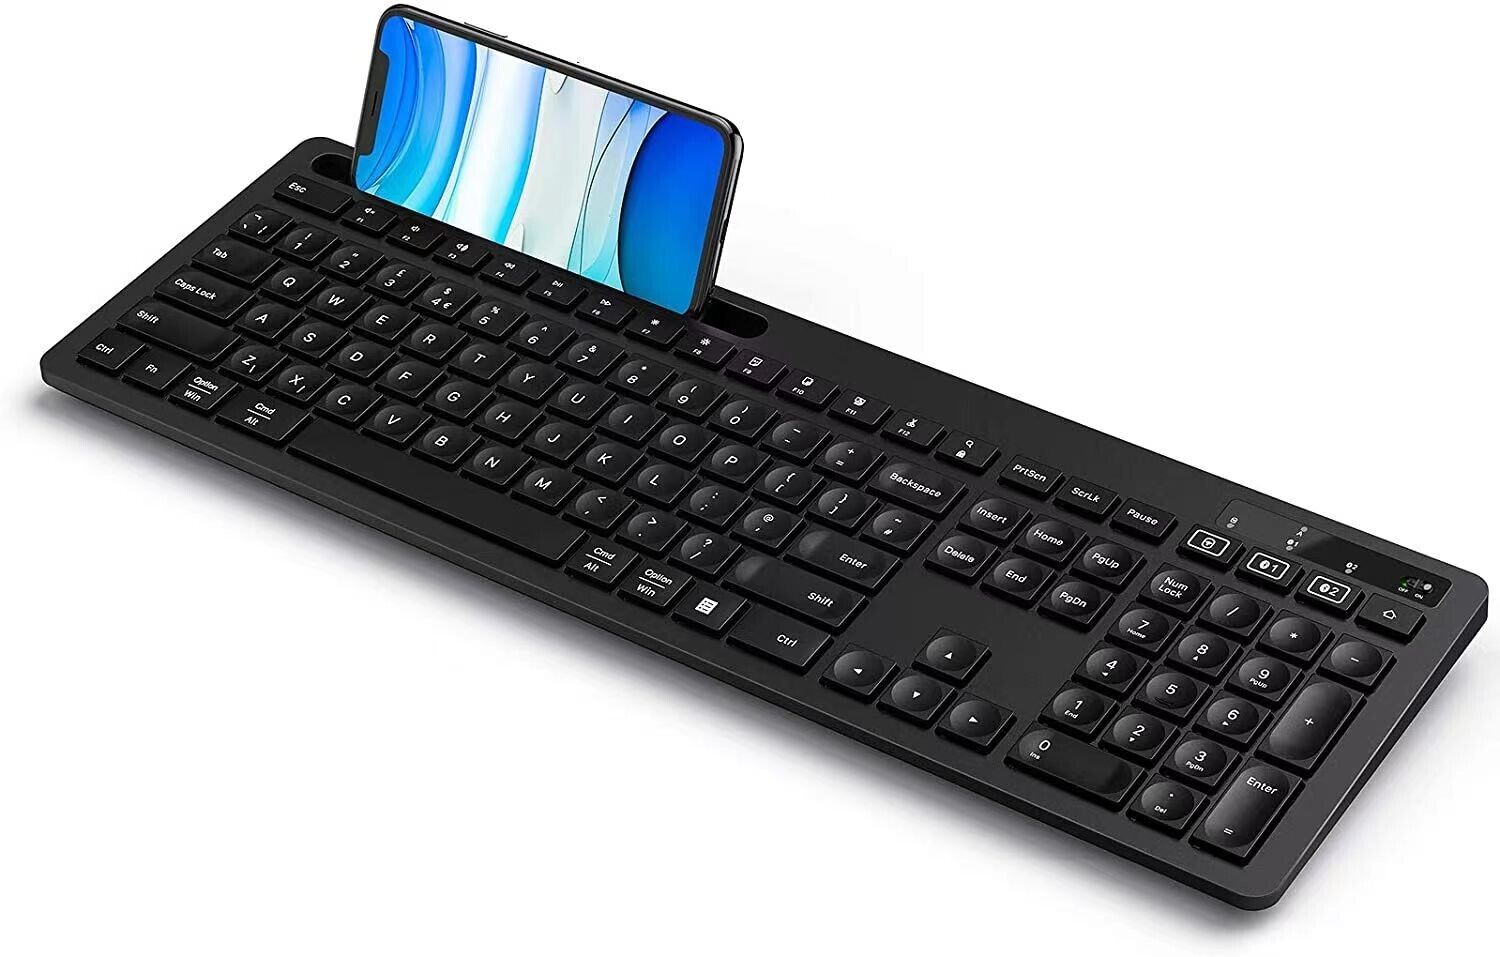 2.4G & Bluetooth Keyboard with Phone Holder -- Seenda wireless keyboard features